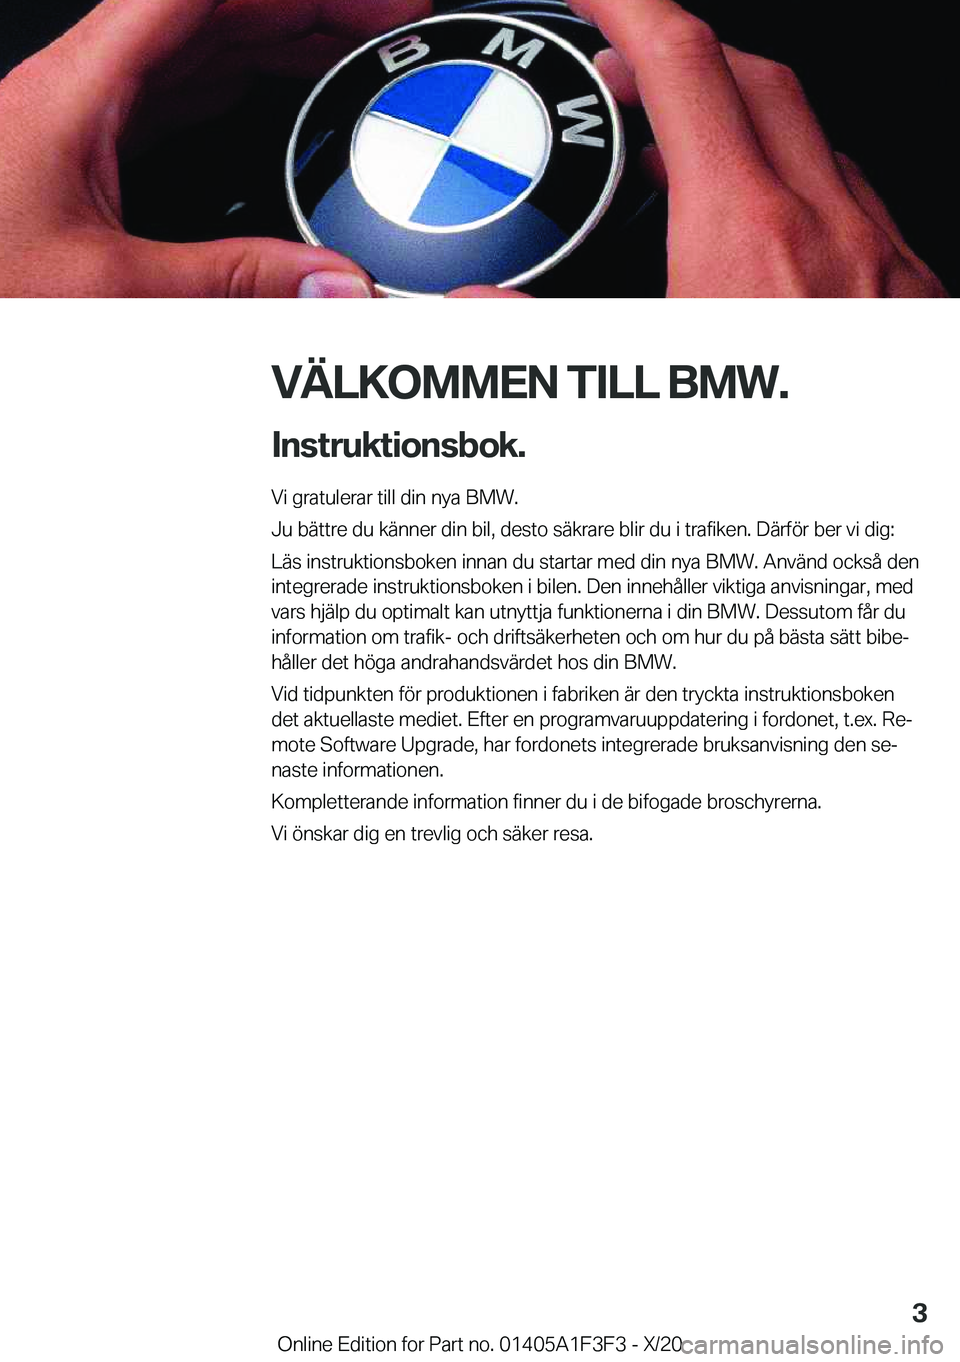 BMW X5 2021  InstruktionsbÖcker (in Swedish) �V�Ä�L�K�O�M�M�E�N��T�I�L�L��B�M�W�.�I�n�s�t�r�u�k�t�i�o�n�s�b�o�k�.
�V�i��g�r�a�t�u�l�e�r�a�r��t�i�l�l��d�i�n��n�y�a��B�M�W�.
�J�u��b�ä�t�t�r�e��d�u��k�ä�n�n�e�r��d�i�n��b�i�l�,��d�e�